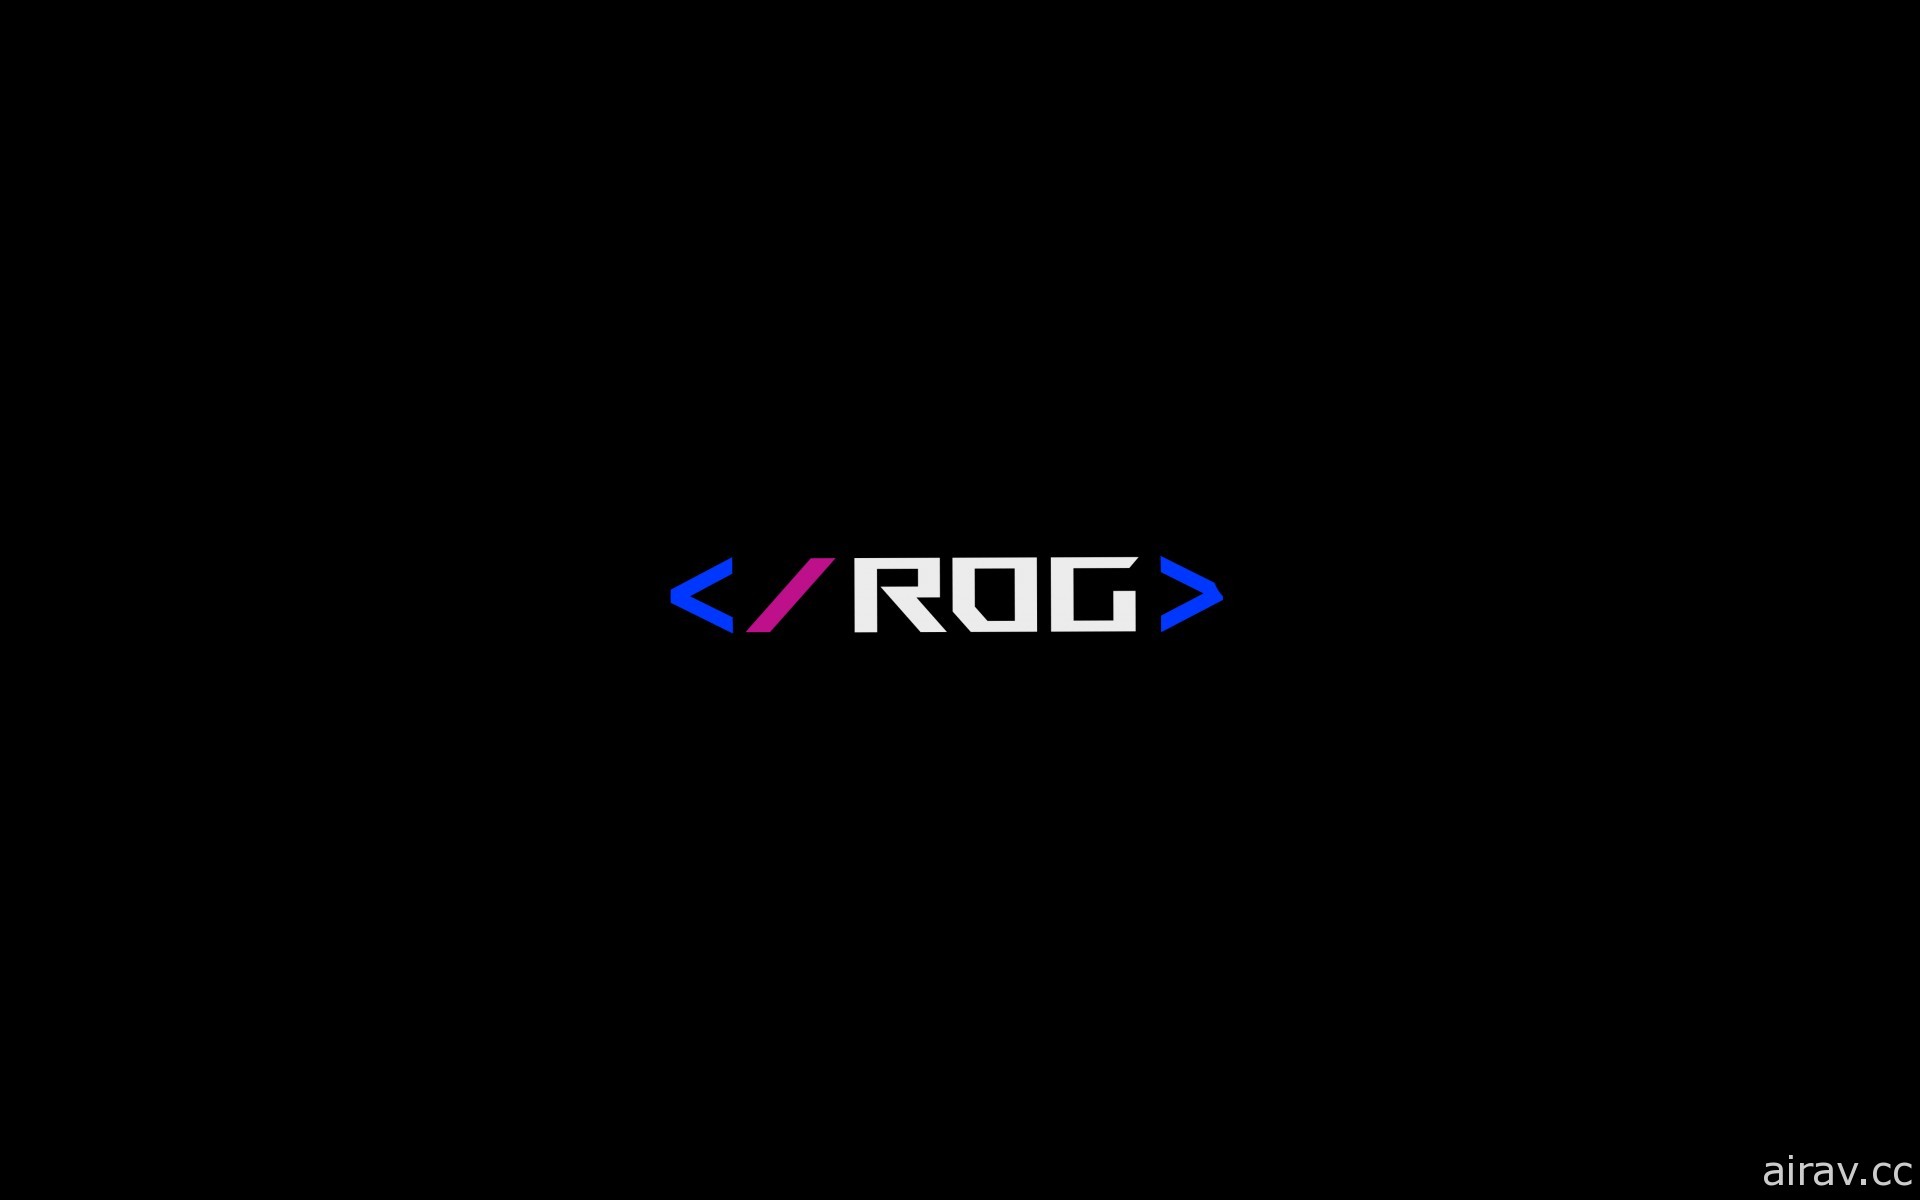 ROG SLASH 電競潮品系列首波推出六款商品 融合編碼與賽博龐克元素